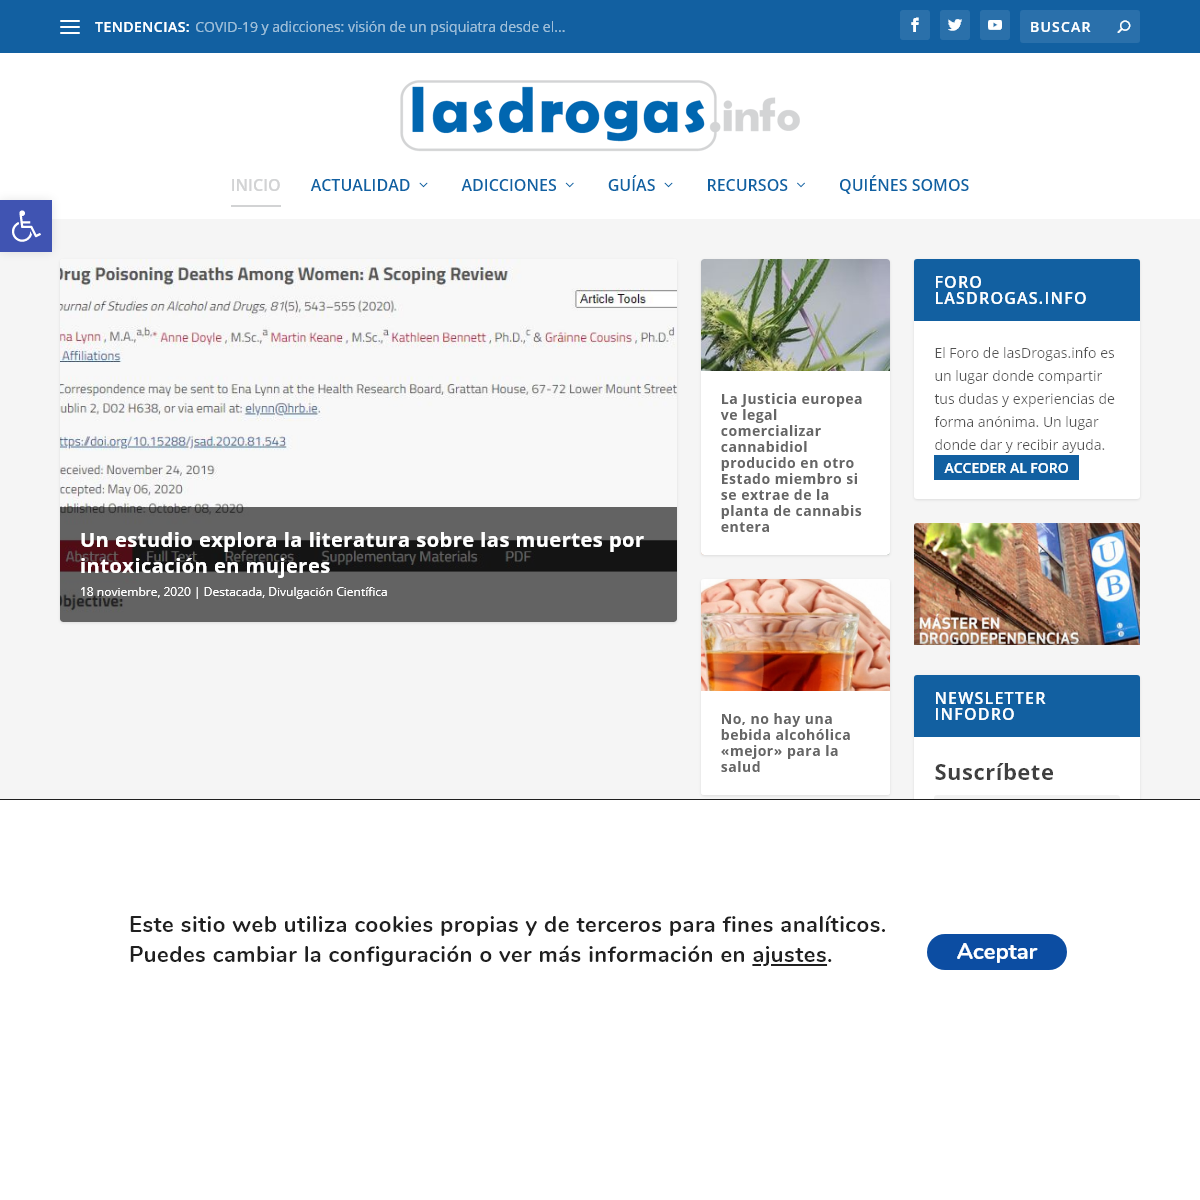 A complete backup of lasdrogas.info